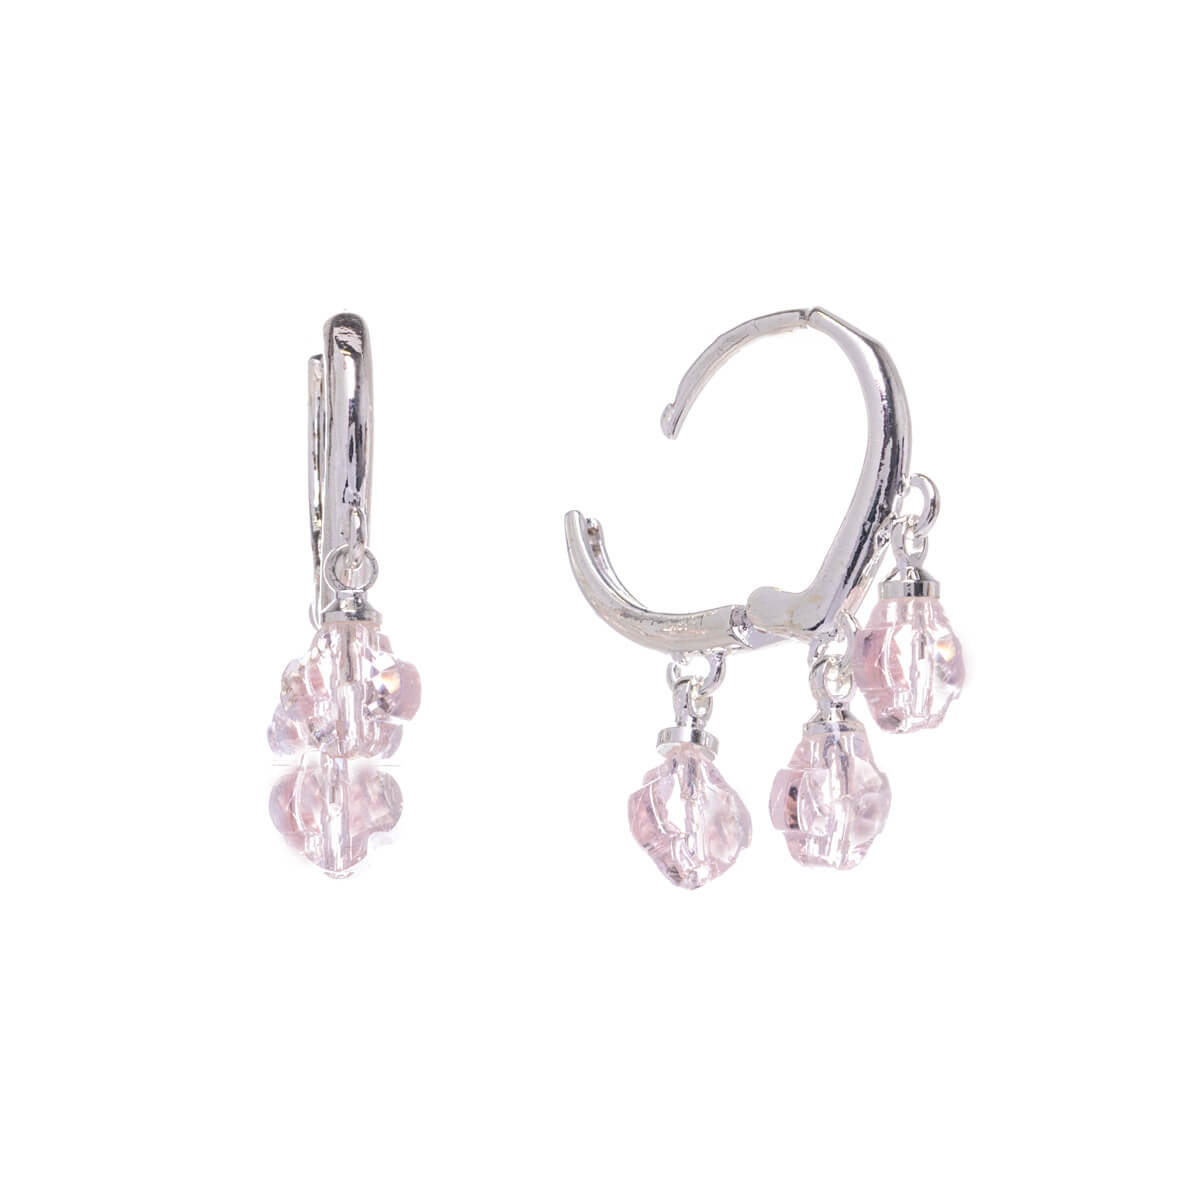 Silver earrings with glass bead pendants